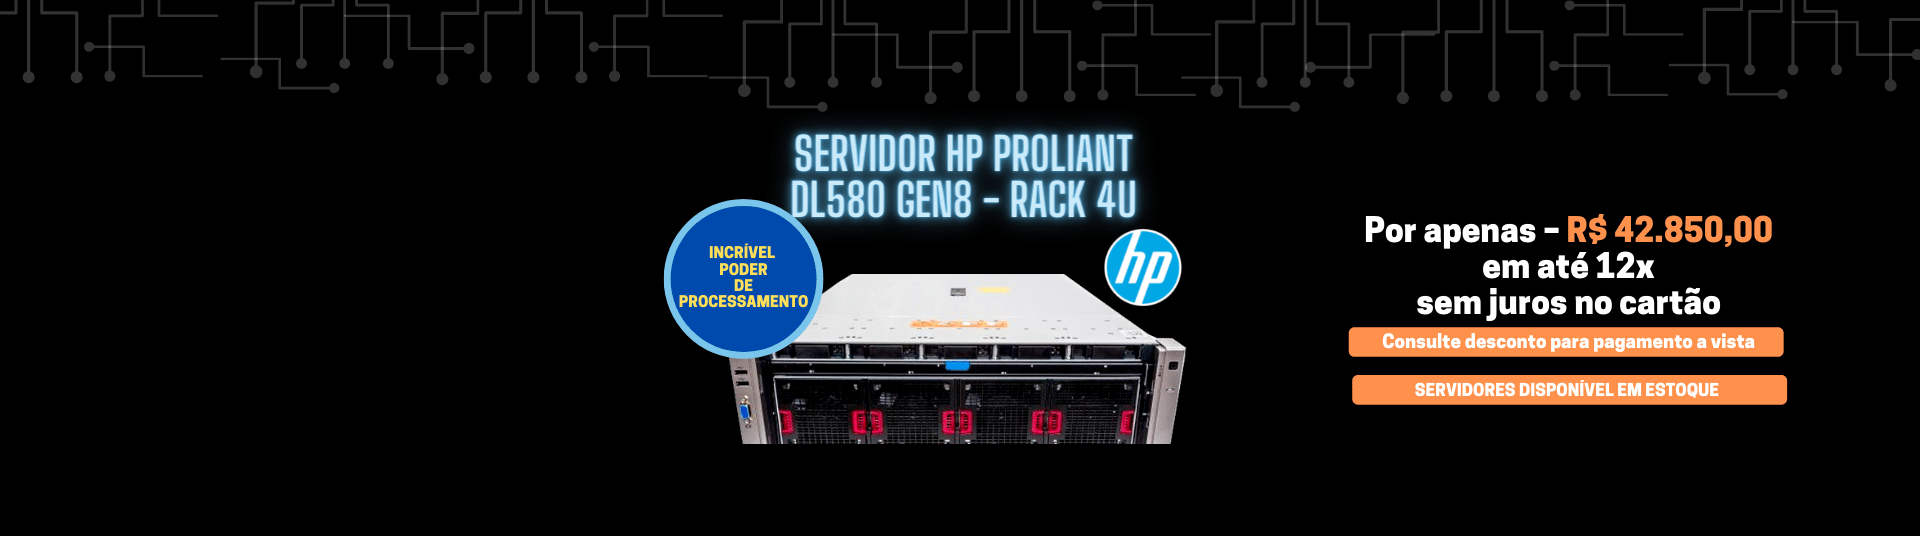 SERVIDOR HP PROLIANT DL580 Gen8 - RACK 4U